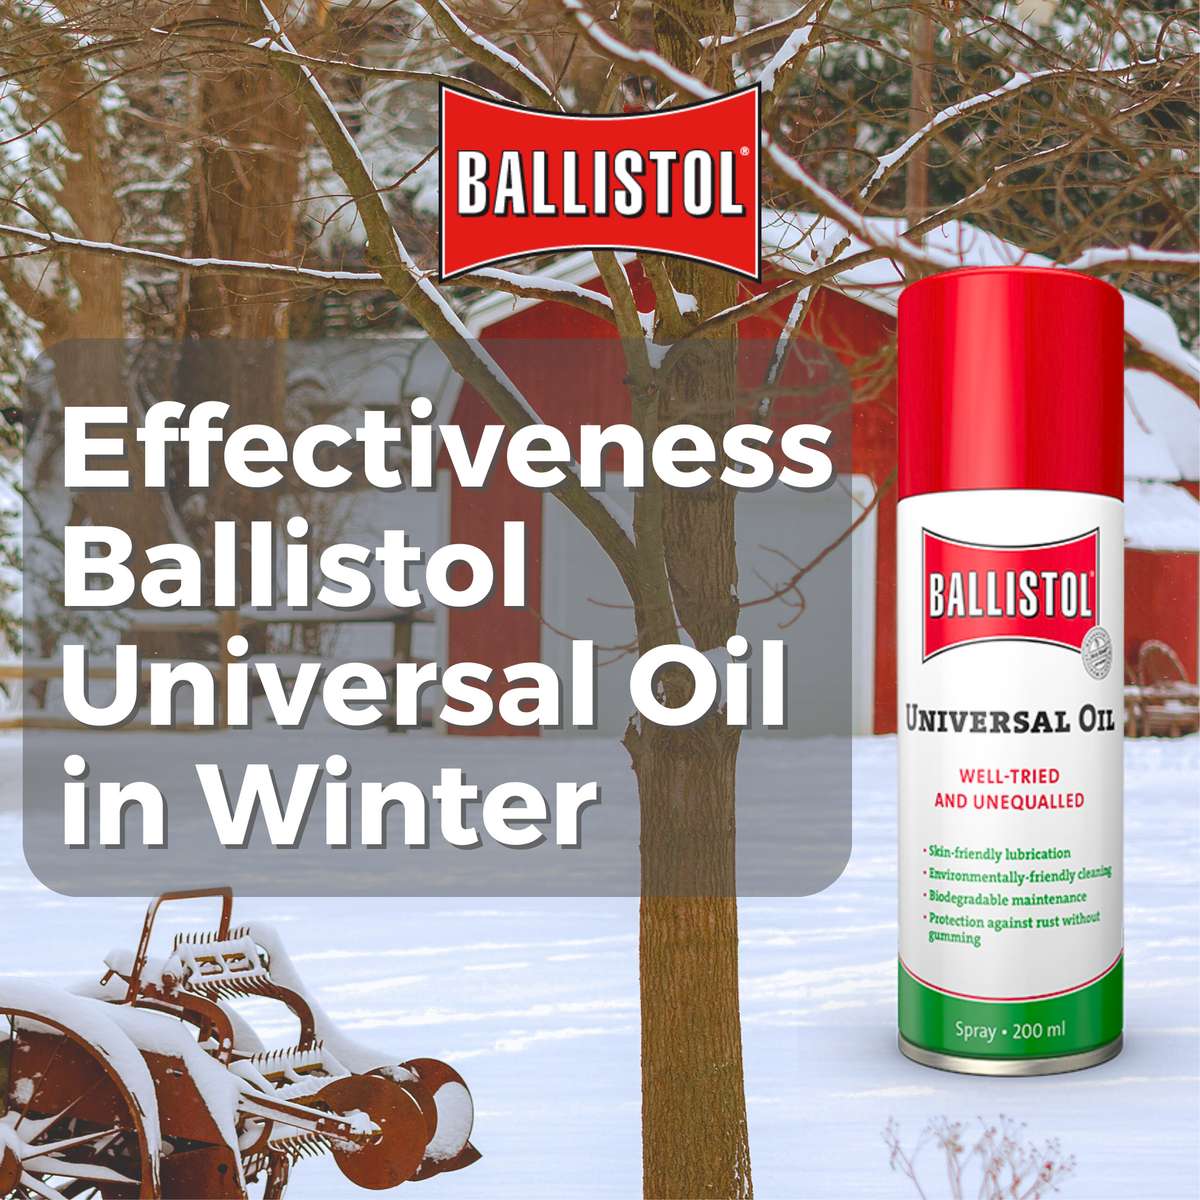 Ballistol UK > Article: Ballistol Universal Oil for Winter Use: A